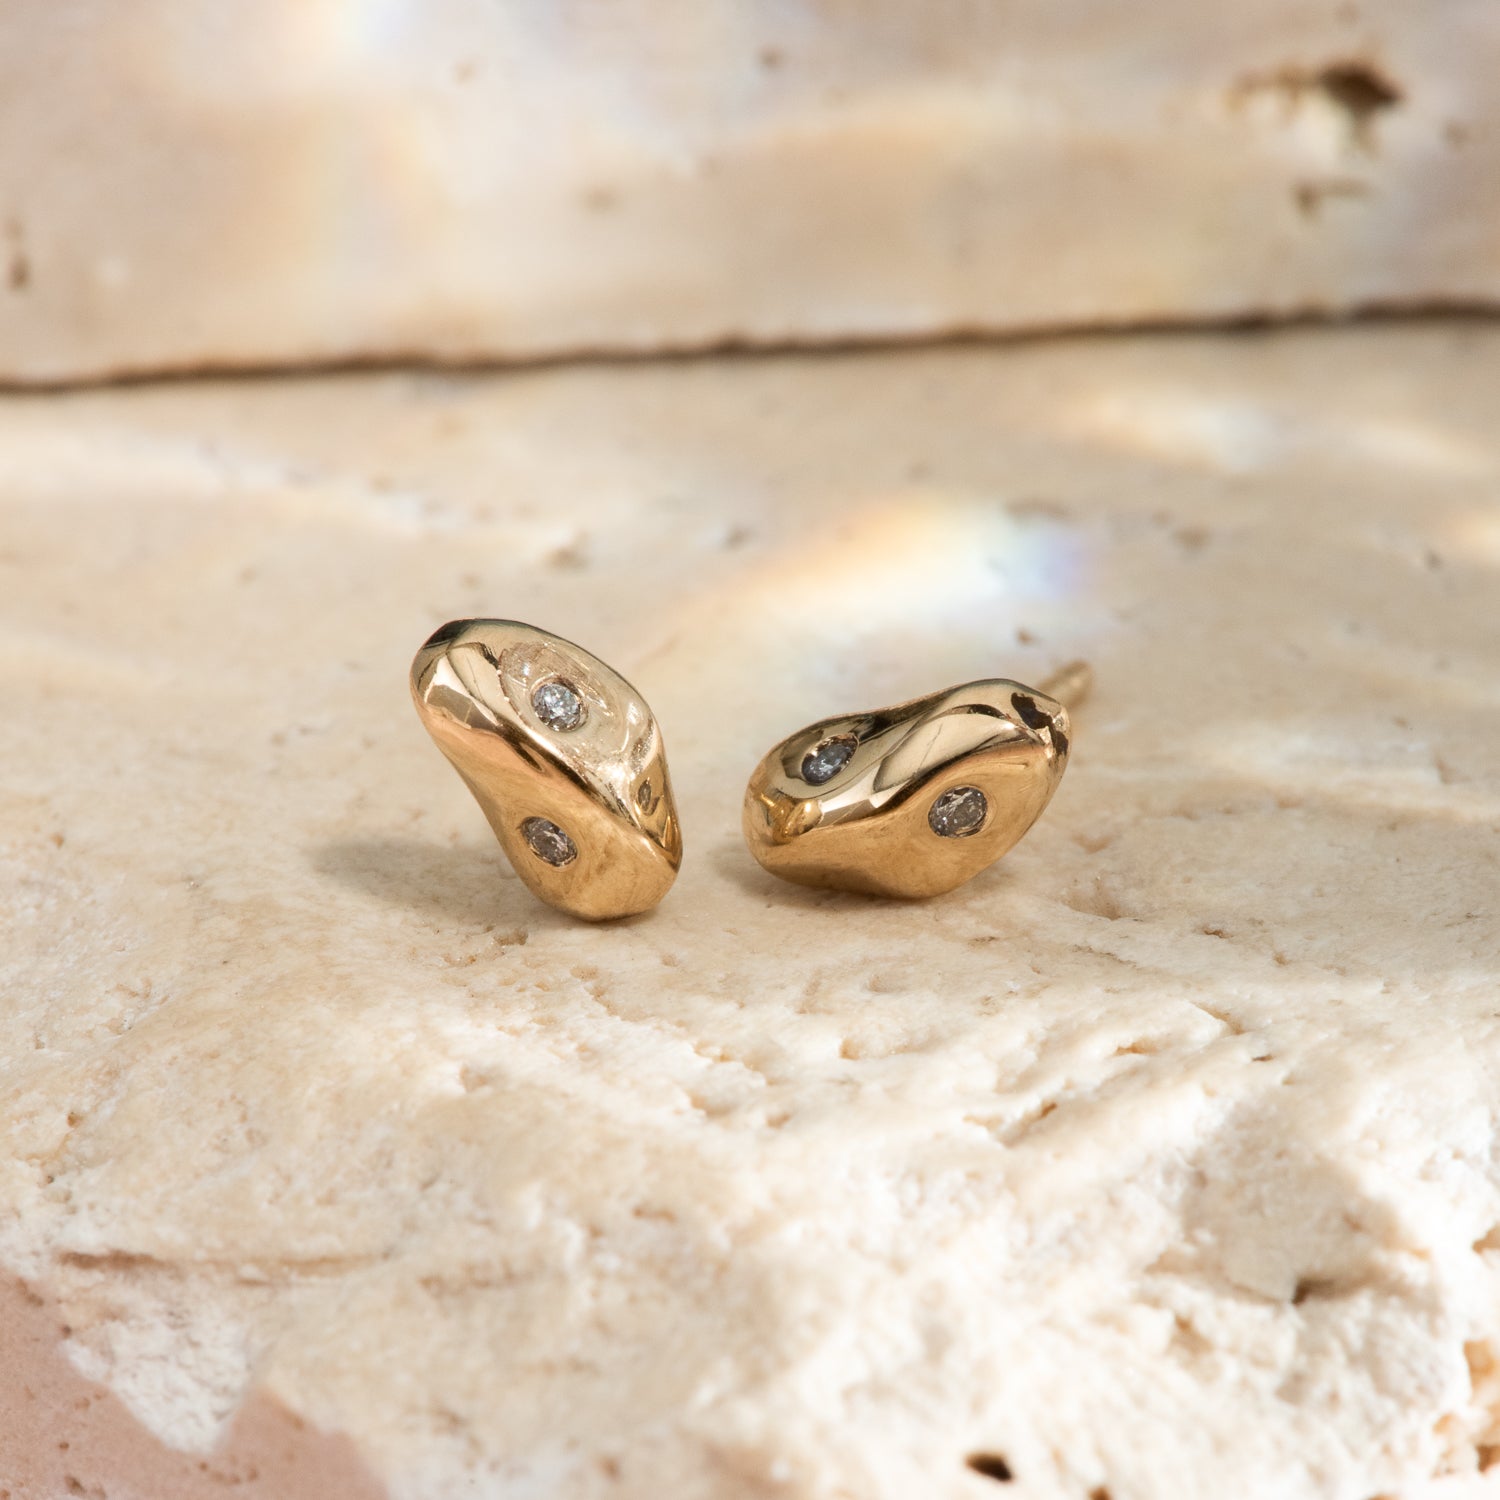 Irregular, pebble shaped yellow gold stud earrings, each with 2 flush set small diamonds.